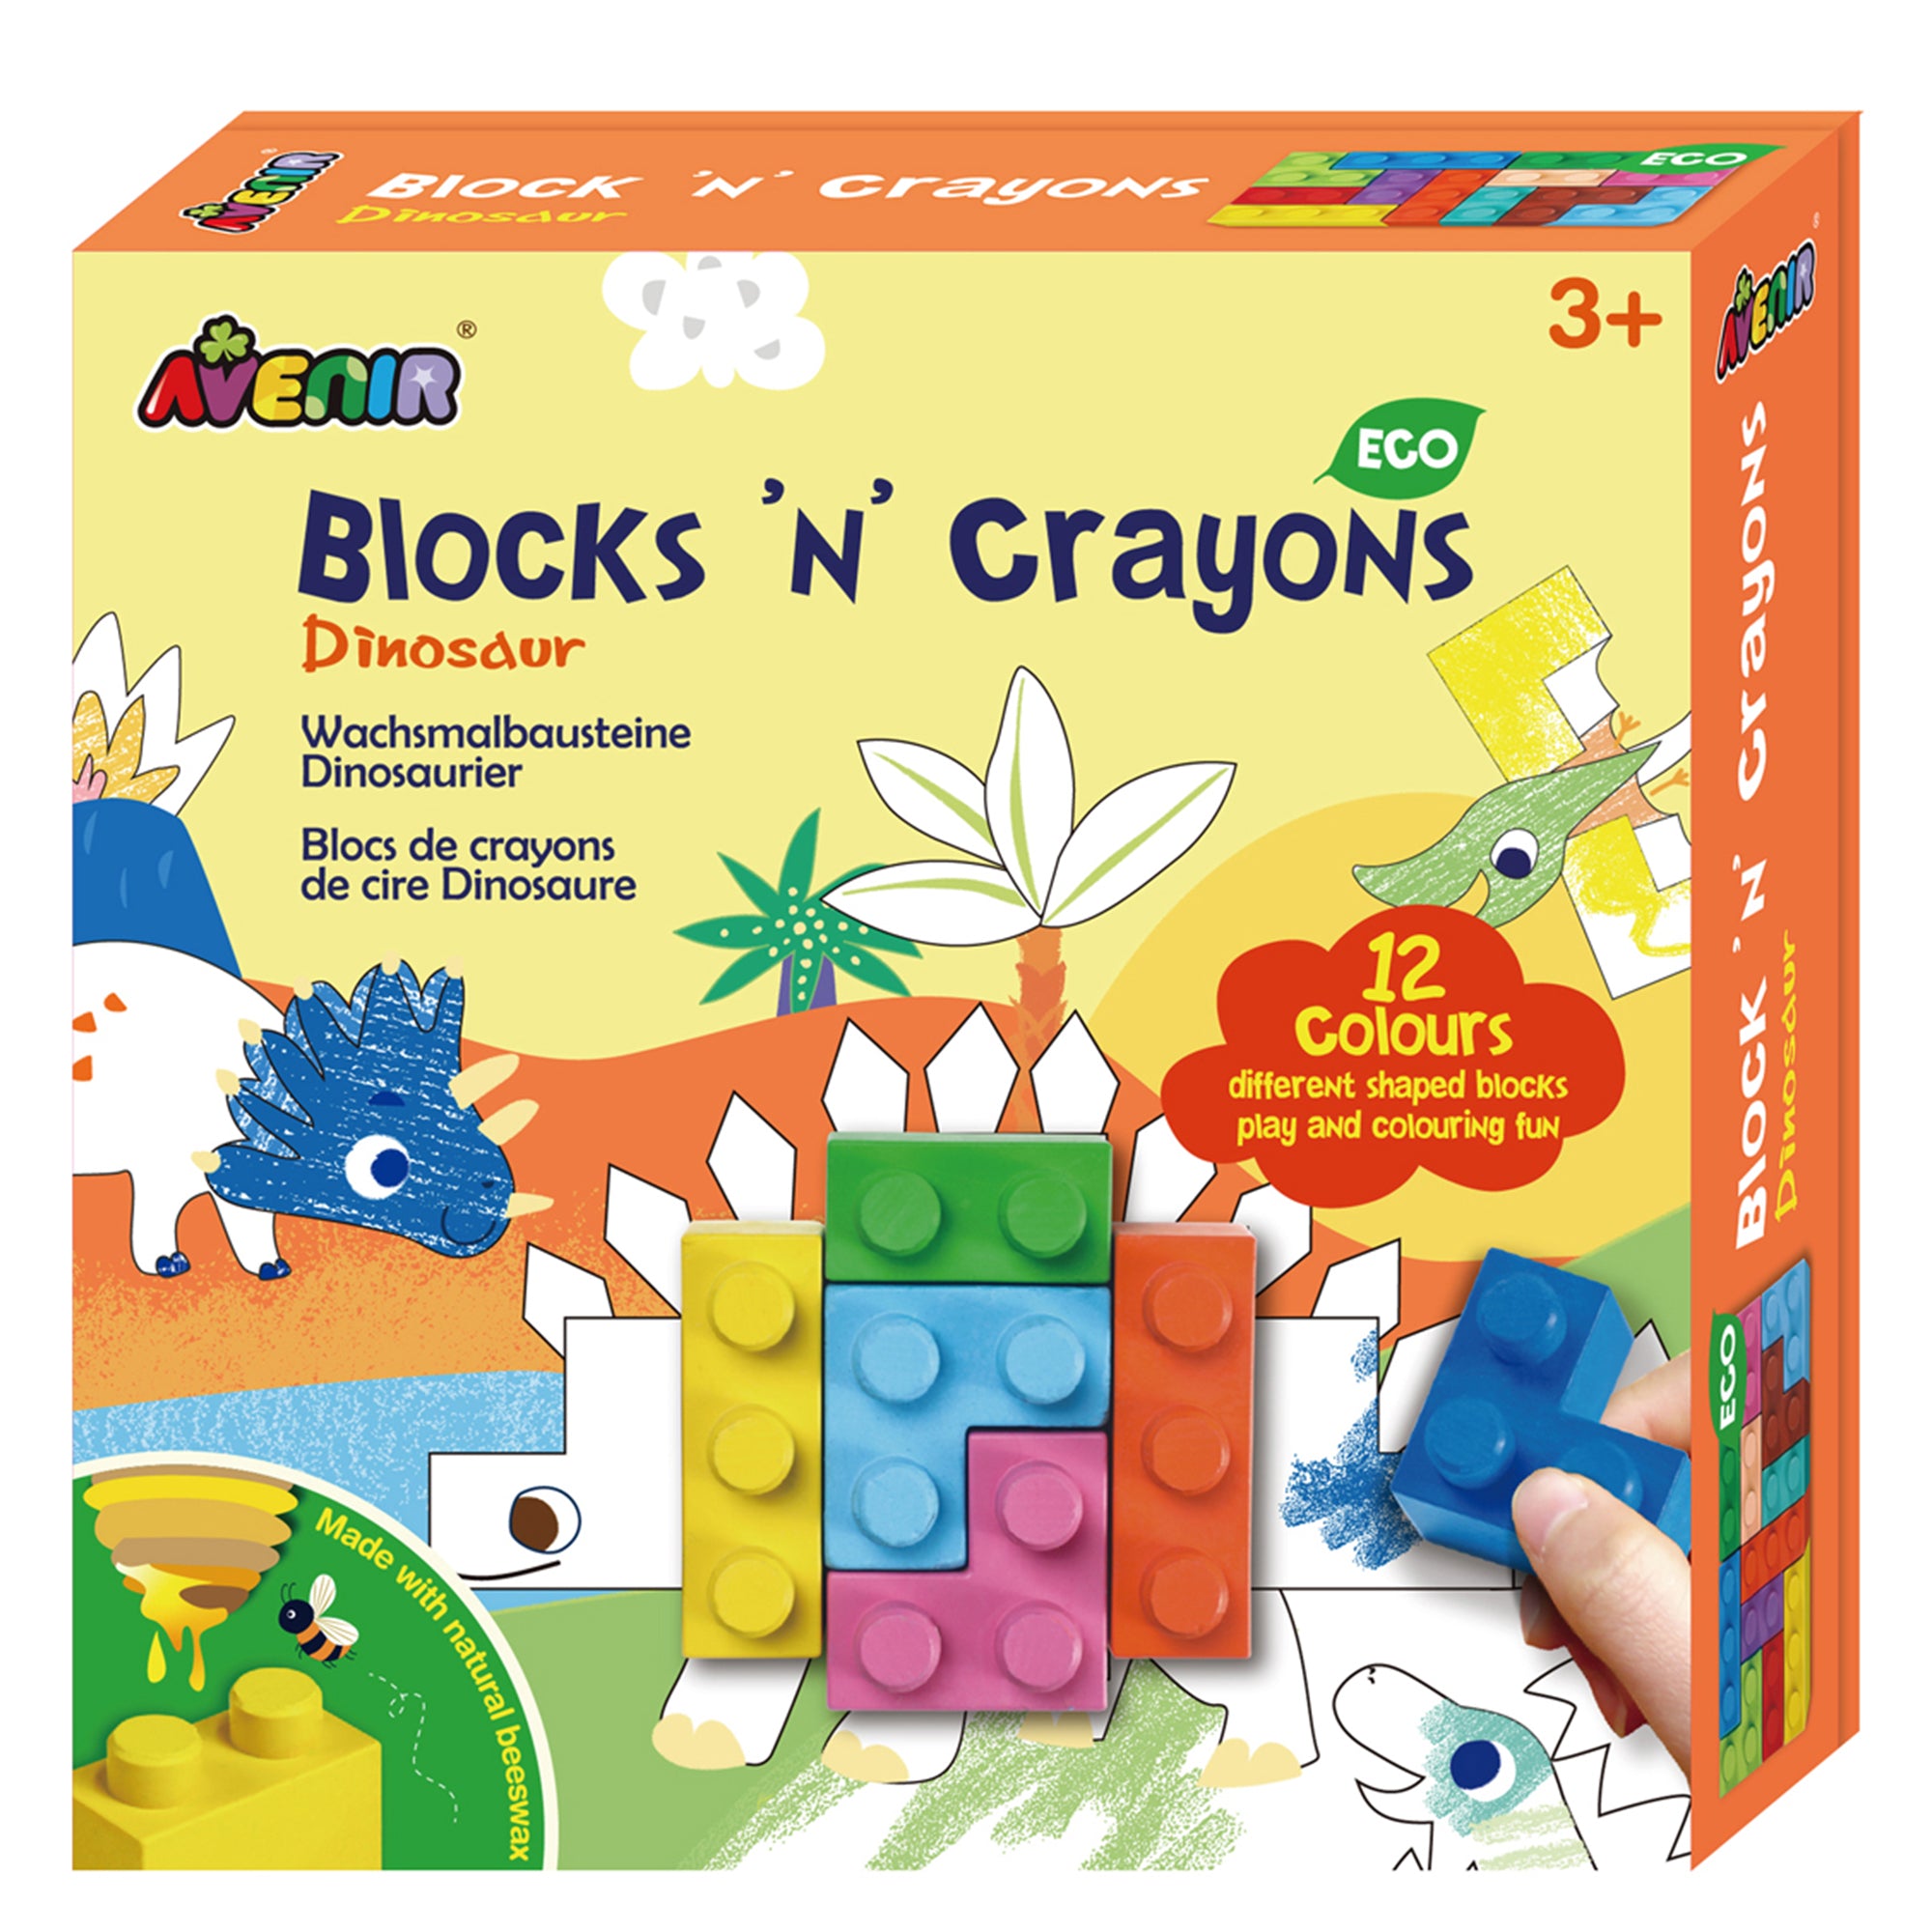 Dinosaur Crayon Roll, Toddler Travel Toy, Boy's Crayon Case